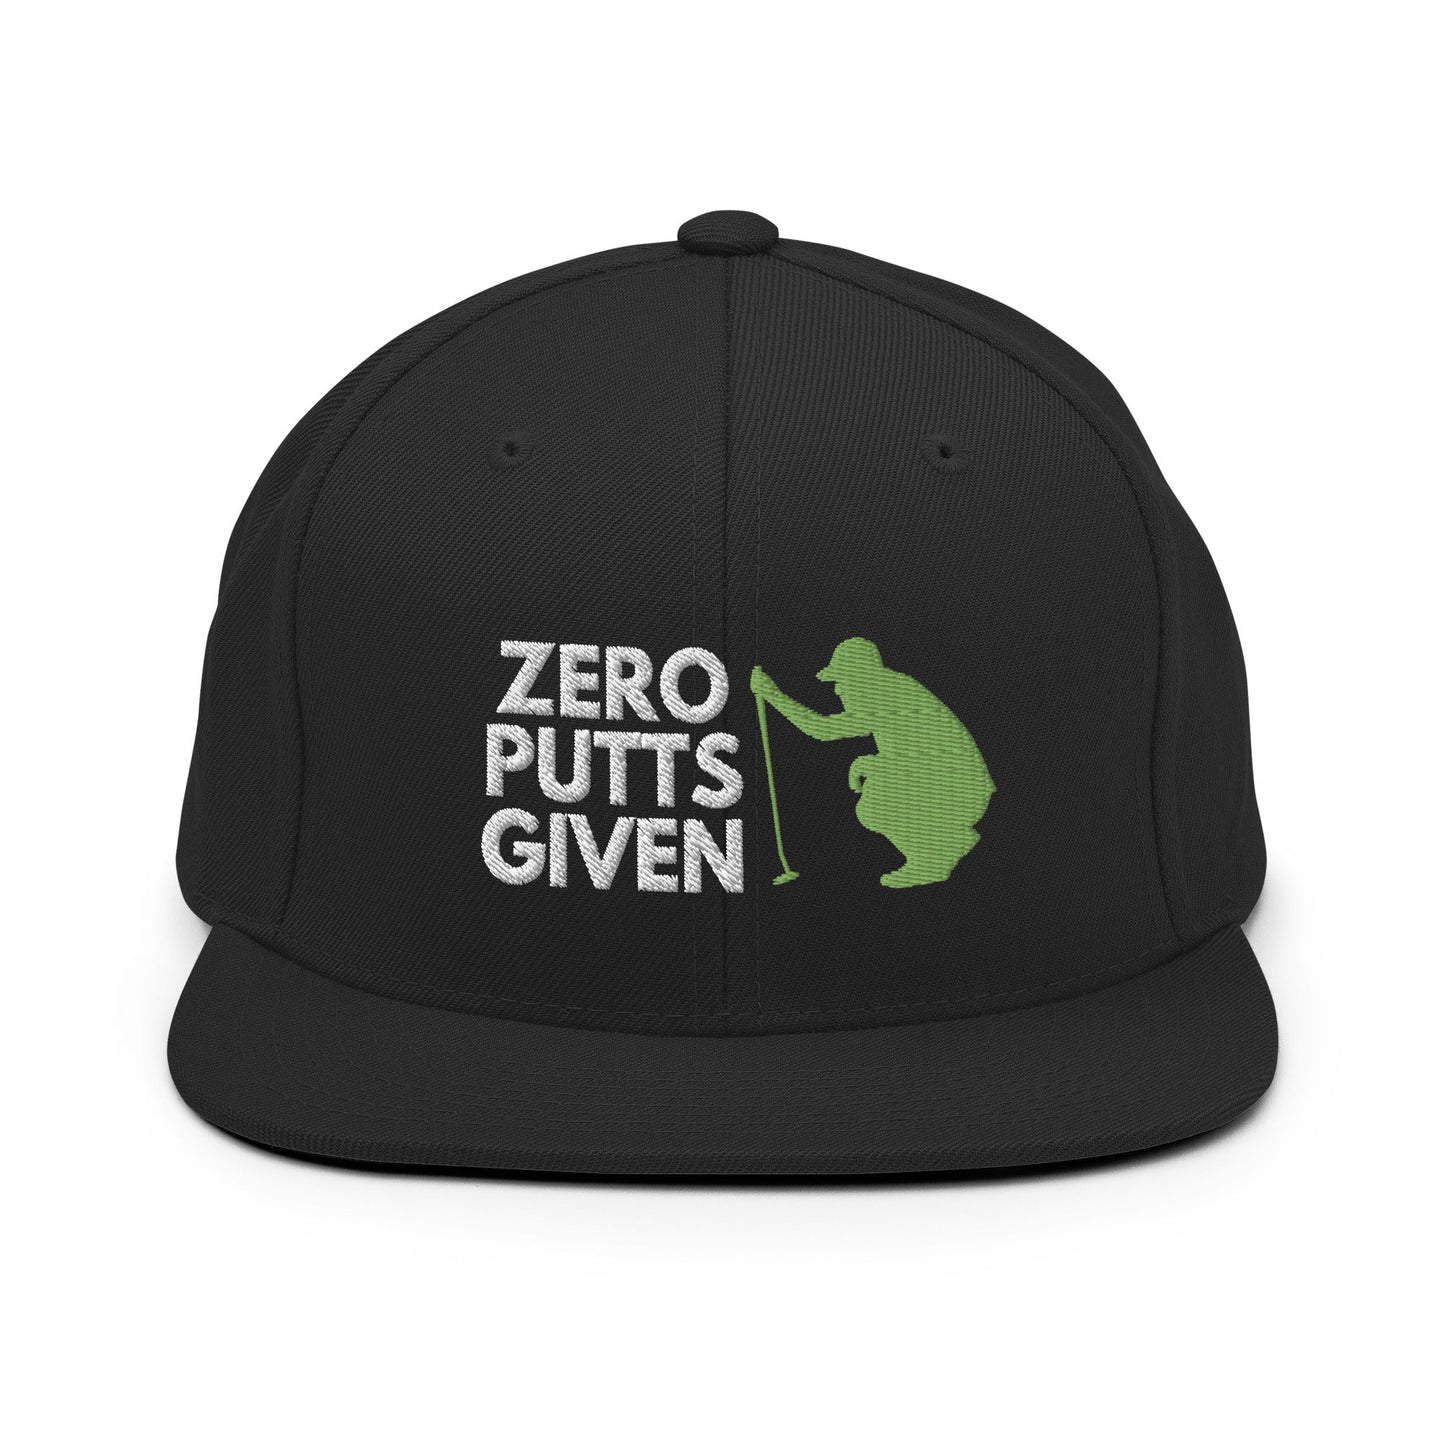 Funny Golfer Gifts  Snapback Hat Black Zero Putts Given Hat Snapback Hat